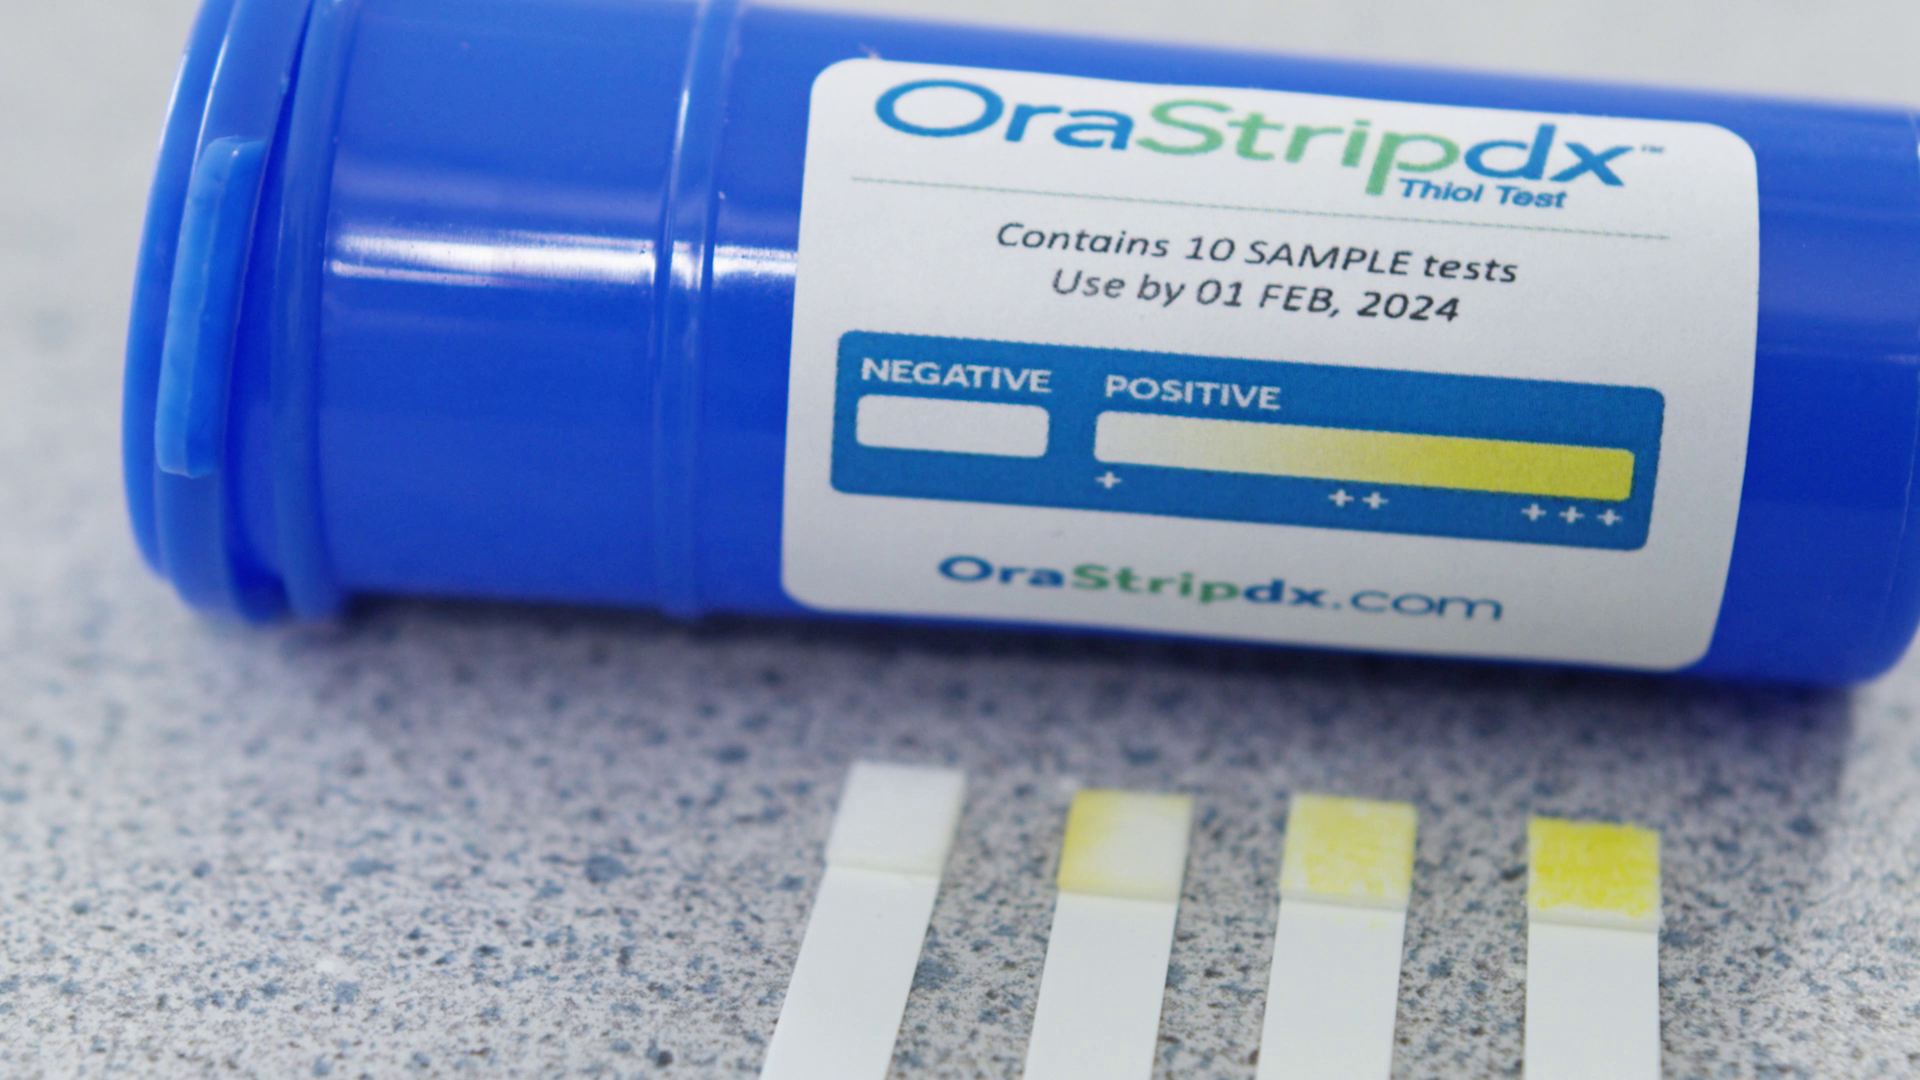 OraStripdx for detecting periodontal disease in pets